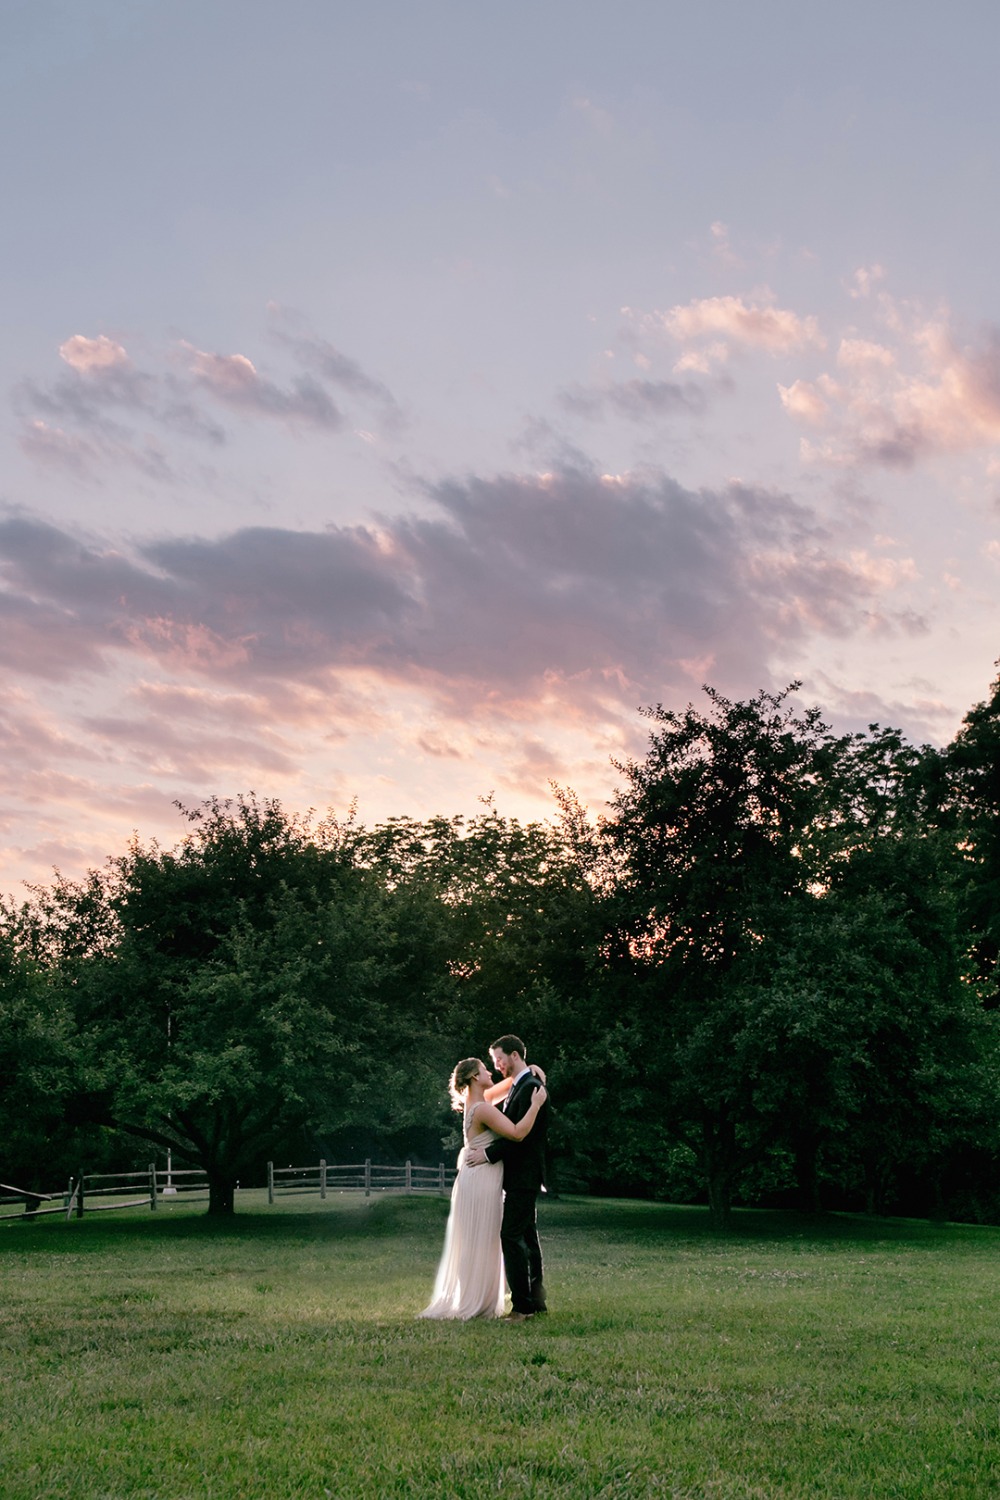 Sunset wedding photo idea